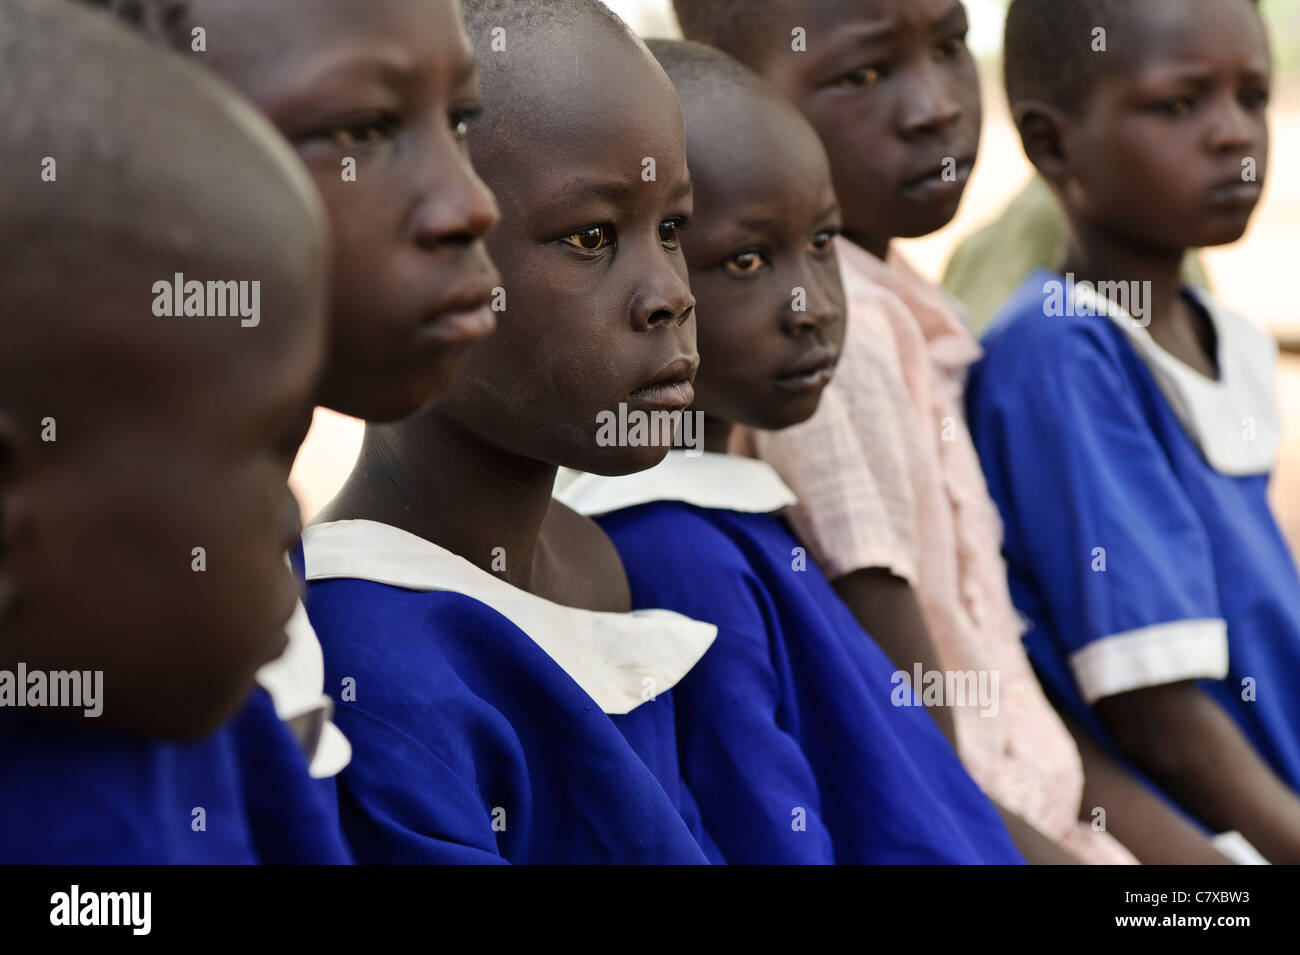 Children at an outdoor school, Luonyaker, Bahr el Ghazal, South Sudan. Stock Photo